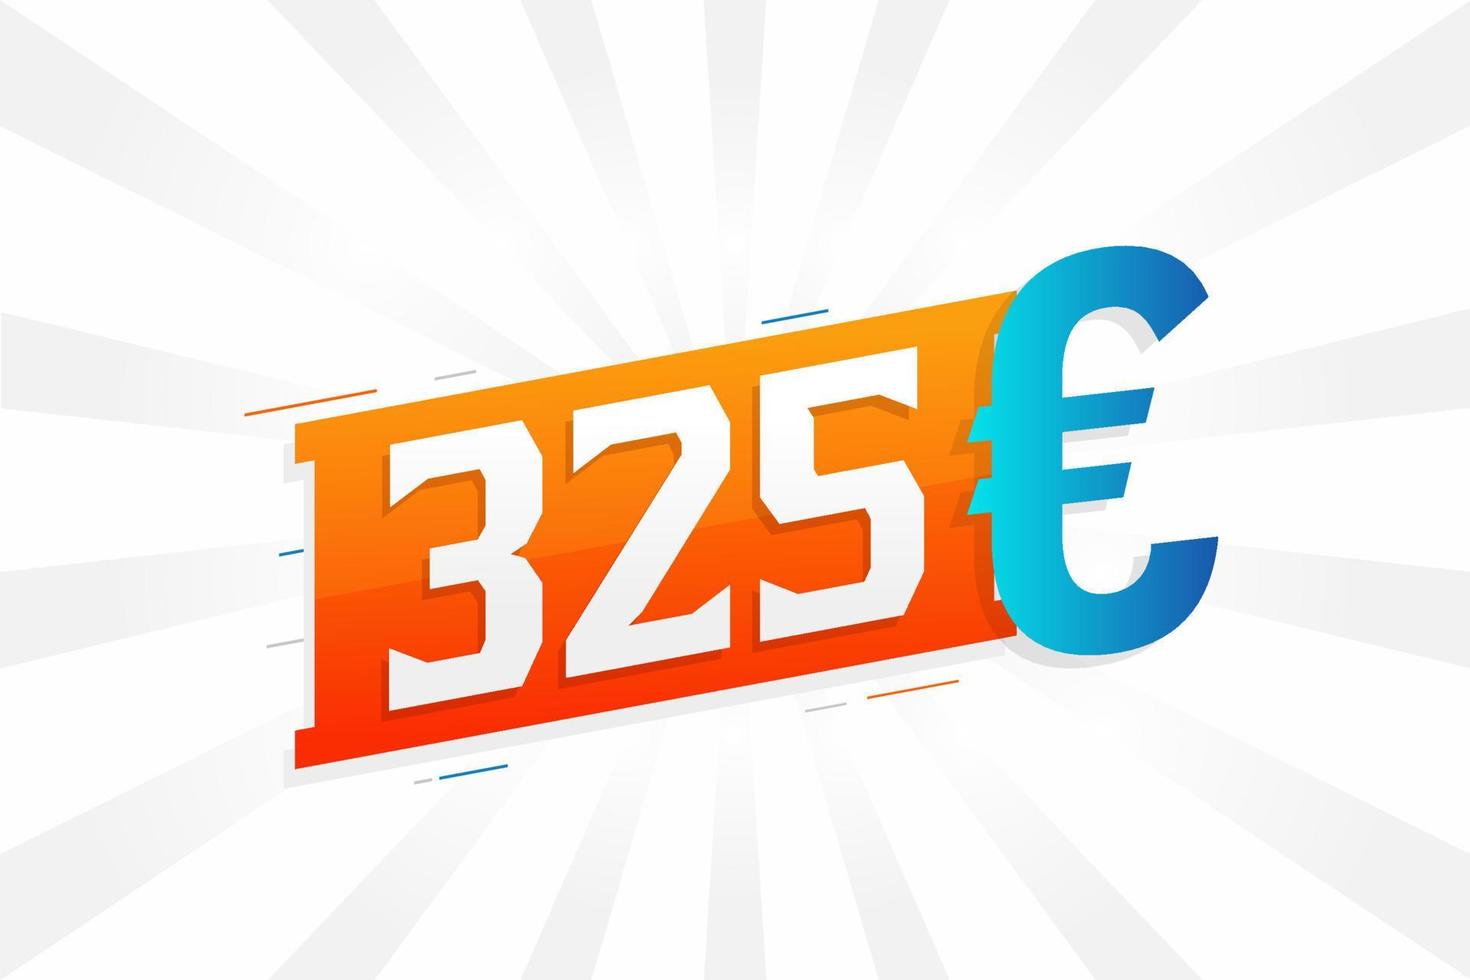 325 euro valuta vektor text symbol. 325 euro europeisk union pengar stock vektor